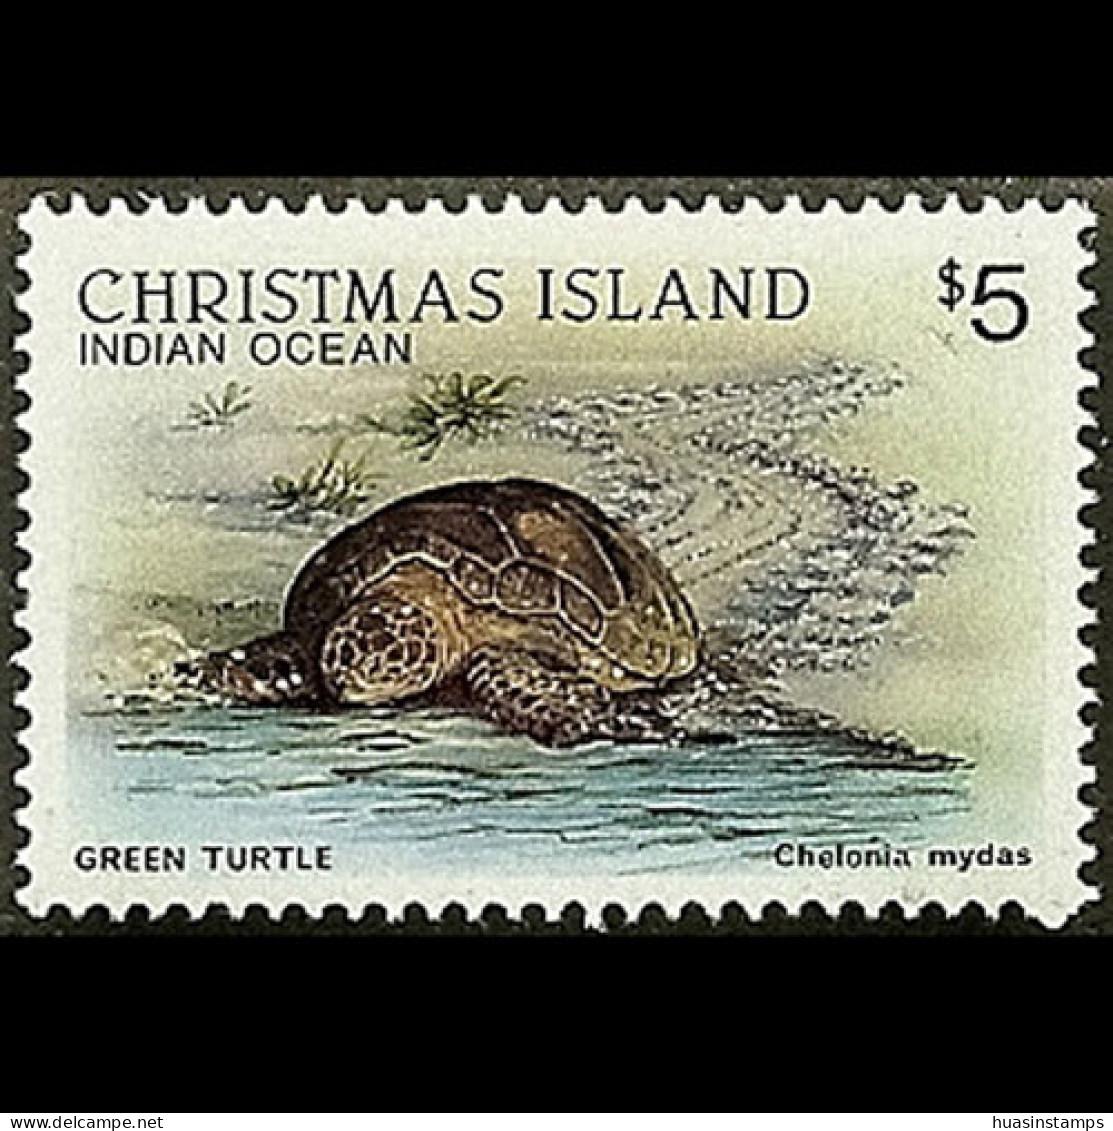 CHRISTMAS IS. 1987 - Scott# 211 Green Turtle $5 MNH - Christmas Island